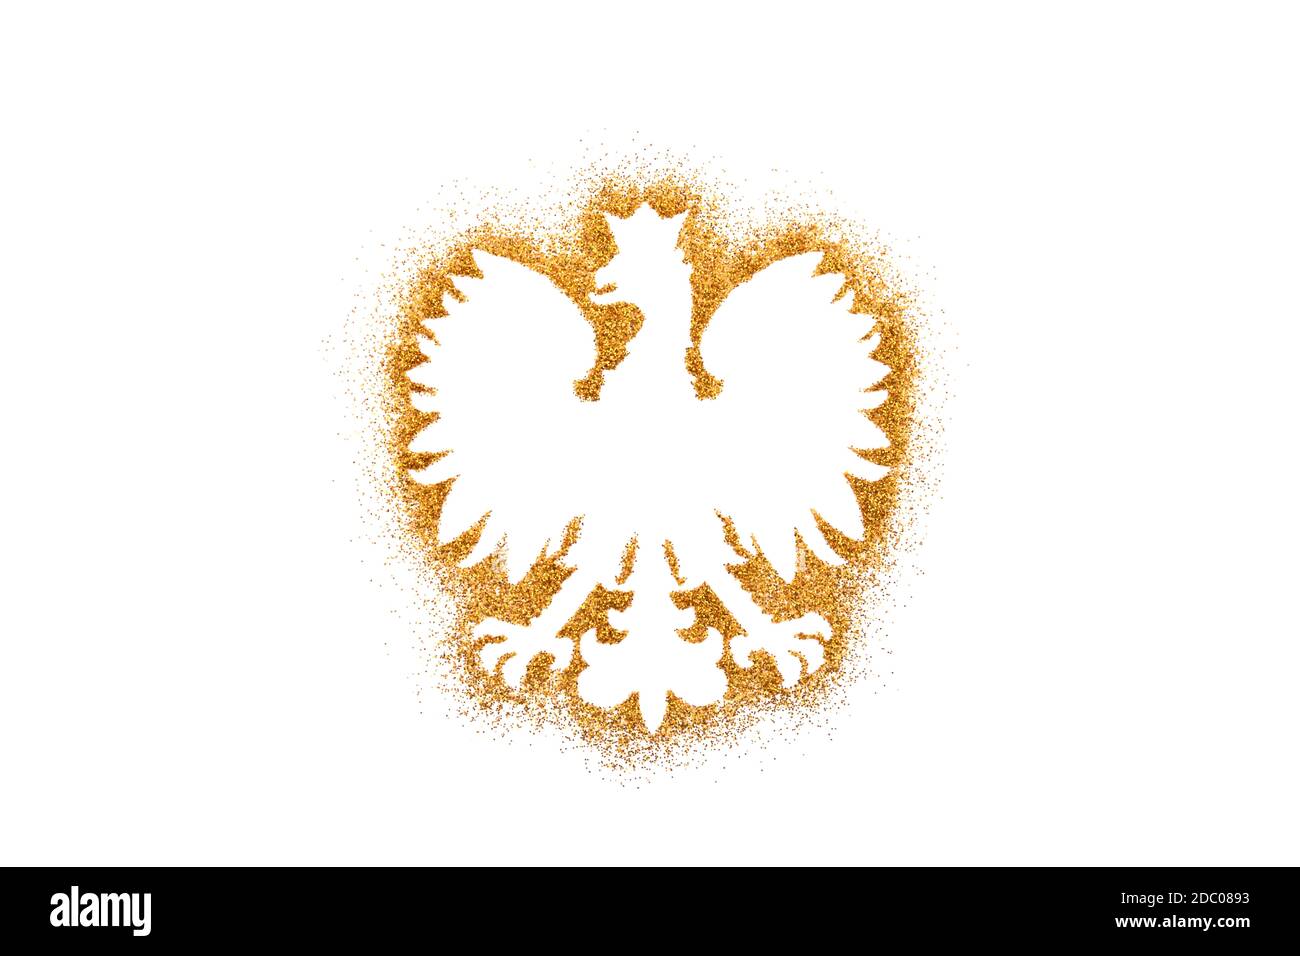 Polish coat of arms shape on golden glitter Stock Photo